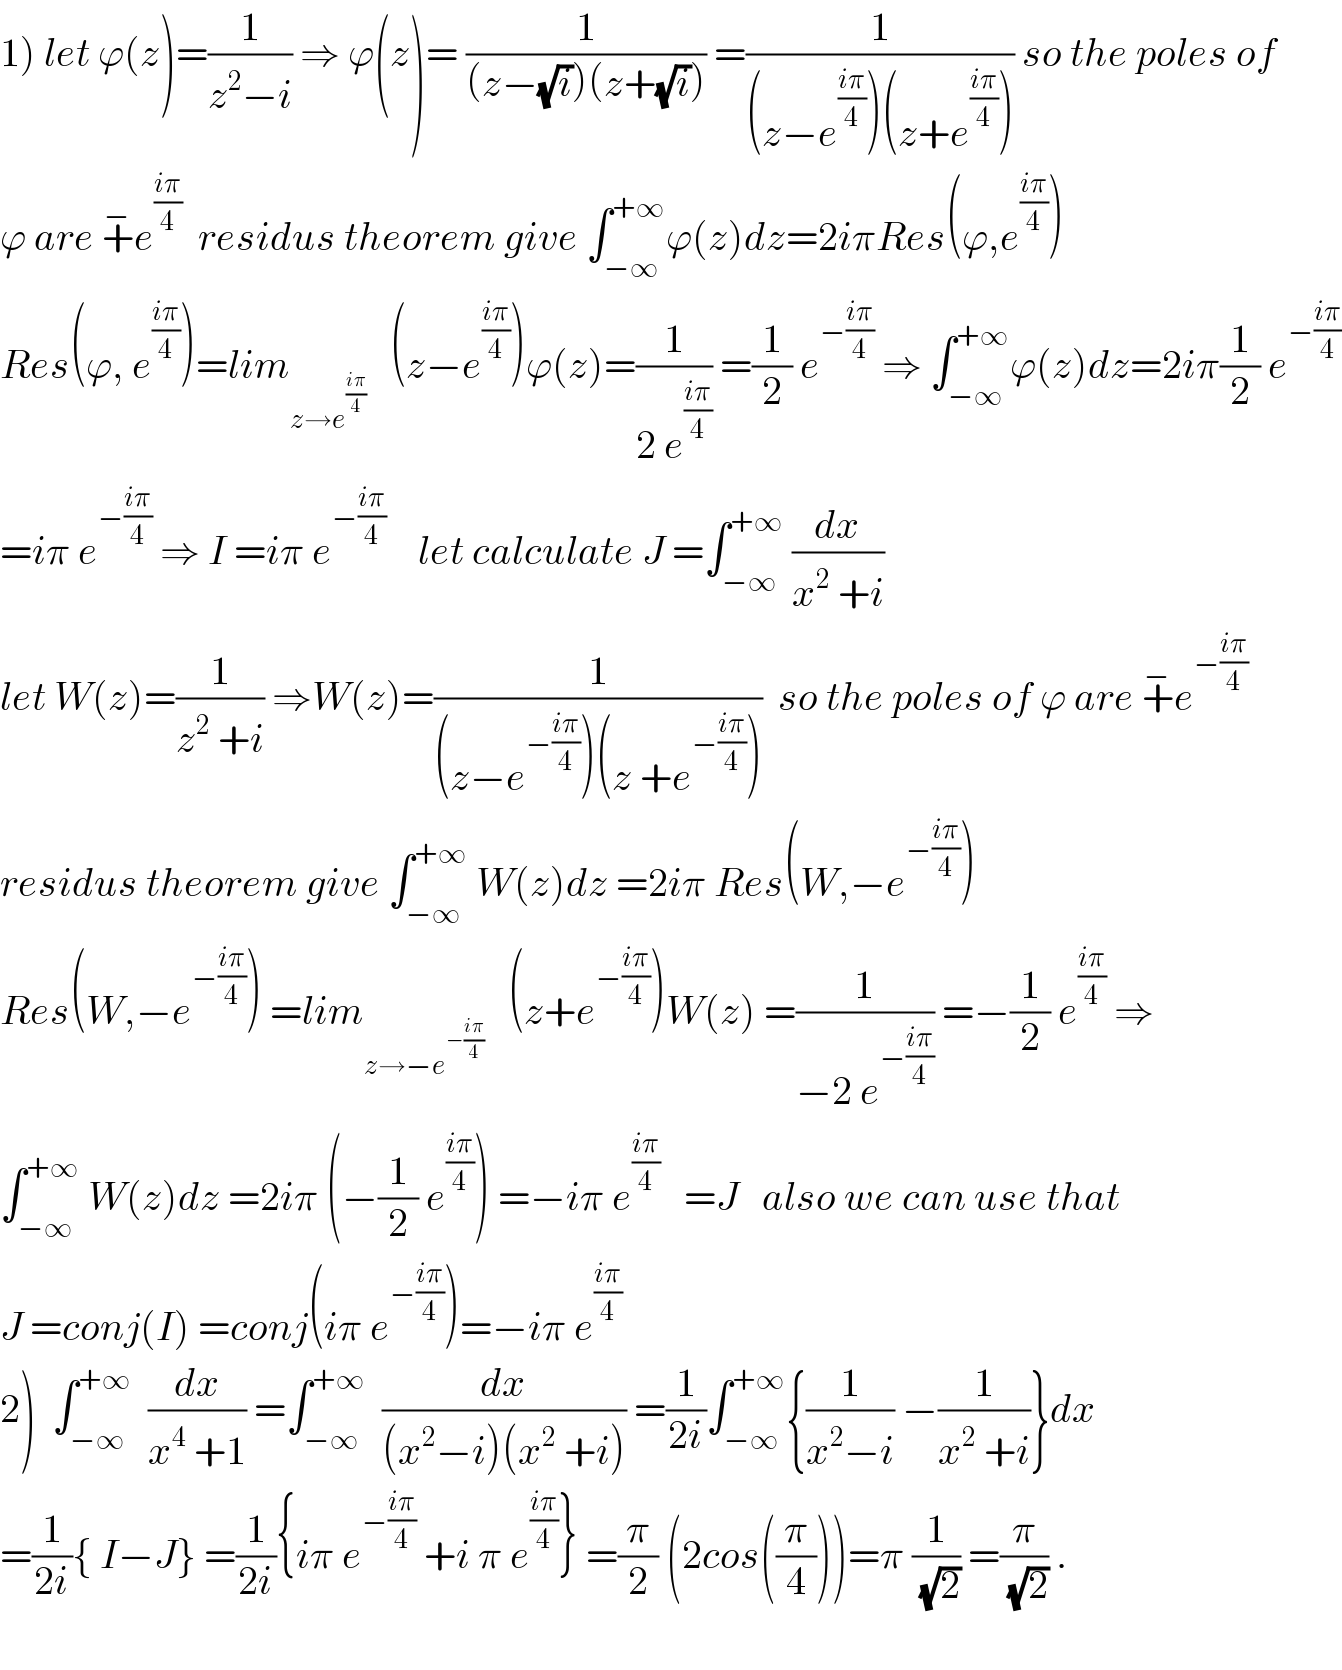 1) let ϕ(z)=(1/(z^2 −i)) ⇒ ϕ(z)= (1/((z−(√i))(z+(√i)))) =(1/((z−e^((iπ)/4) )(z+e^((iπ)/4) ))) so the poles of  ϕ are +^− e^((iπ)/4)   residus theorem give ∫_(−∞) ^(+∞) ϕ(z)dz=2iπRes(ϕ,e^((iπ)/4) )  Res(ϕ, e^((iπ)/4) )=lim_(z→e^((iπ)/4) )    (z−e^((iπ)/4) )ϕ(z)=(1/(2 e^((iπ)/4) )) =(1/2) e^(−((iπ)/4))  ⇒ ∫_(−∞) ^(+∞) ϕ(z)dz=2iπ(1/2) e^(−((iπ)/4))   =iπ e^(−((iπ)/4))  ⇒ I =iπ e^(−((iπ)/4))     let calculate J =∫_(−∞) ^(+∞)  (dx/(x^2  +i))  let W(z)=(1/(z^2  +i)) ⇒W(z)=(1/((z−e^(−((iπ)/4)) )(z +e^(−((iπ)/4)) )))  so the poles of ϕ are +^− e^(−((iπ)/4))   residus theorem give ∫_(−∞) ^(+∞)  W(z)dz =2iπ Res(W,−e^(−((iπ)/4)) )  Res(W,−e^(−((iπ)/4)) ) =lim_(z→−e^(−((iπ)/4)) )    (z+e^(−((iπ)/4)) )W(z) =(1/(−2 e^(−((iπ)/4)) )) =−(1/2) e^((iπ)/4)  ⇒  ∫_(−∞) ^(+∞)  W(z)dz =2iπ (−(1/2) e^((iπ)/4) ) =−iπ e^((iπ)/4)    =J   also we can use that  J =conj(I) =conj(iπ e^(−((iπ)/4)) )=−iπ e^((iπ)/4)    2)  ∫_(−∞) ^(+∞)   (dx/(x^4  +1)) =∫_(−∞) ^(+∞)   (dx/((x^2 −i)(x^2  +i))) =(1/(2i))∫_(−∞) ^(+∞) {(1/(x^2 −i)) −(1/(x^2  +i))}dx  =(1/(2i)){ I−J} =(1/(2i)){iπ e^(−((iπ)/4))  +i π e^((iπ)/4) } =(π/2) (2cos((π/4)))=π (1/(√2)) =(π/(√2)) .    